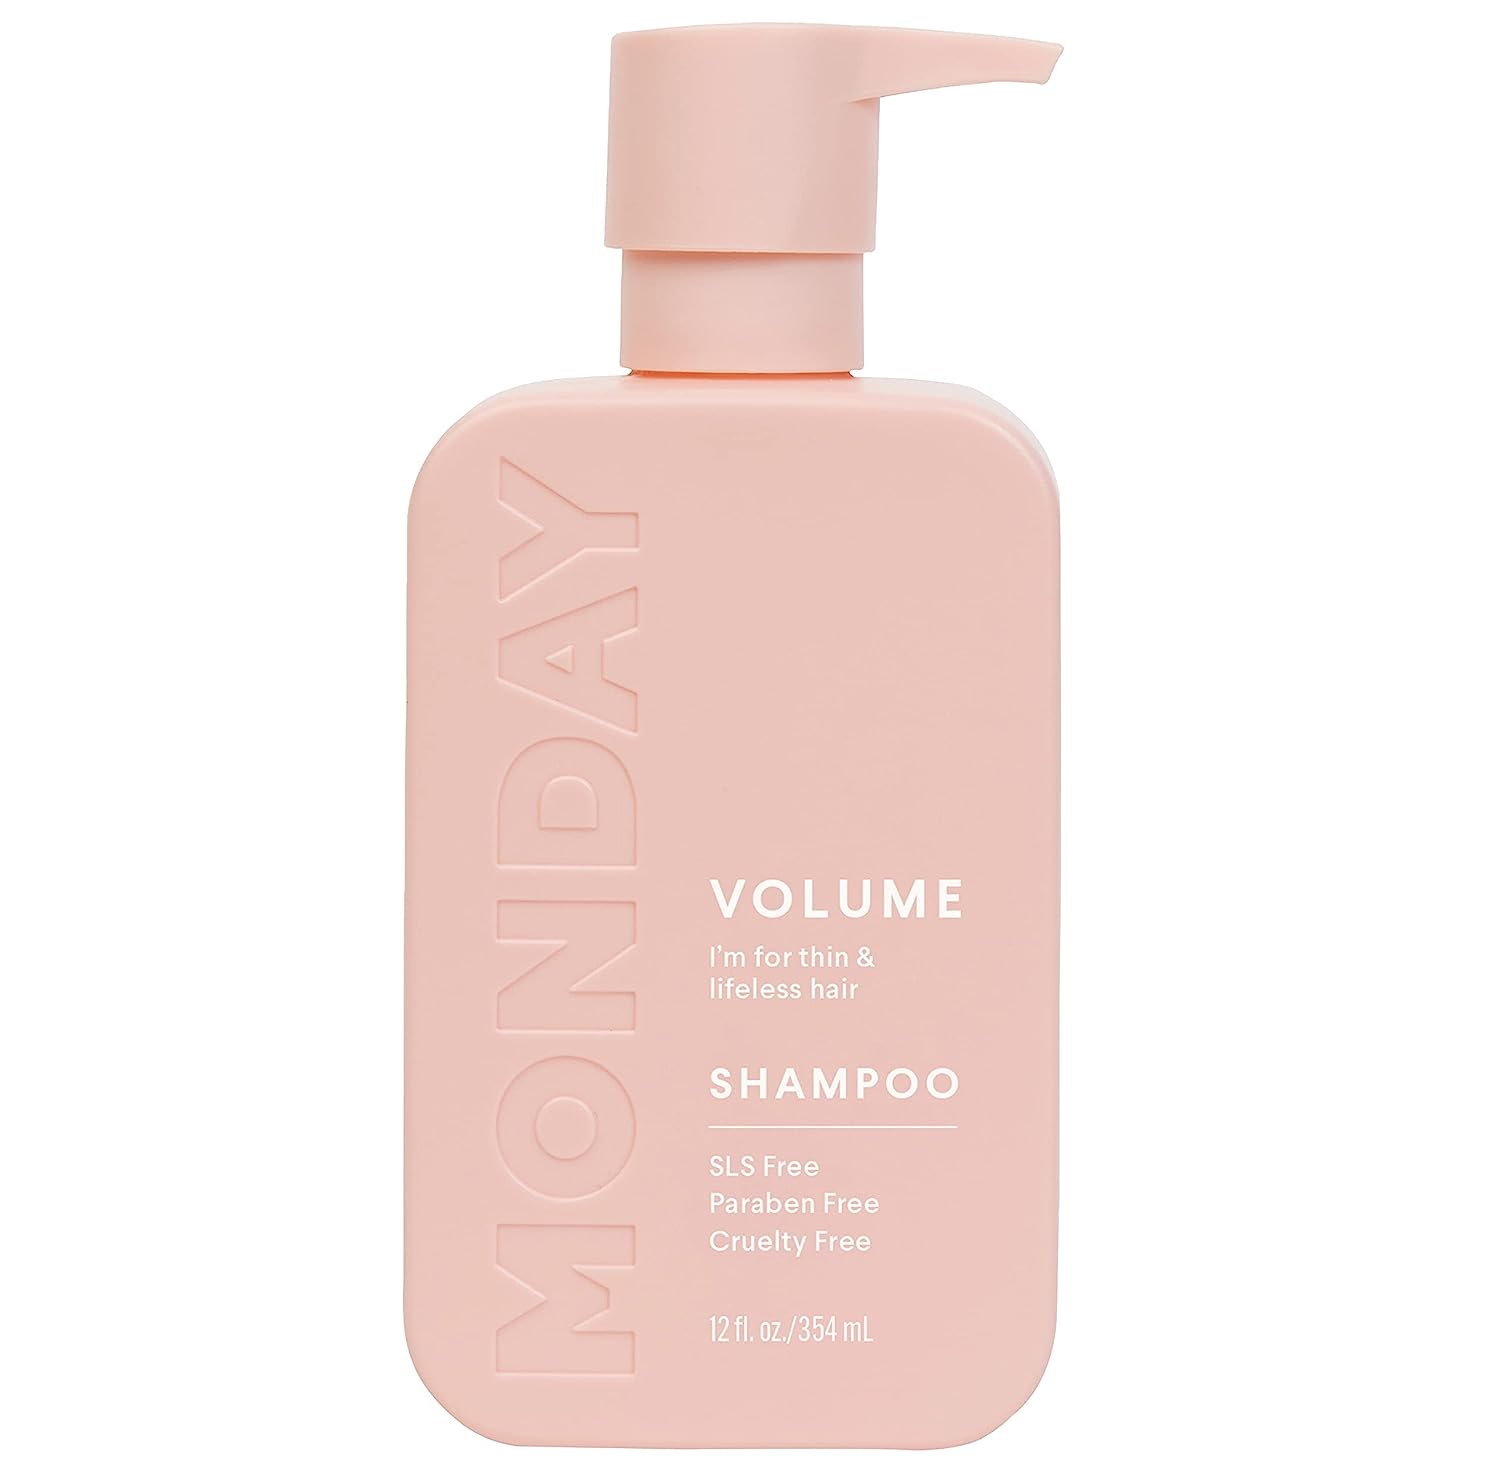 MONDAY Haircare Volume Shampoo 12oz for Thin, Fine, [...]